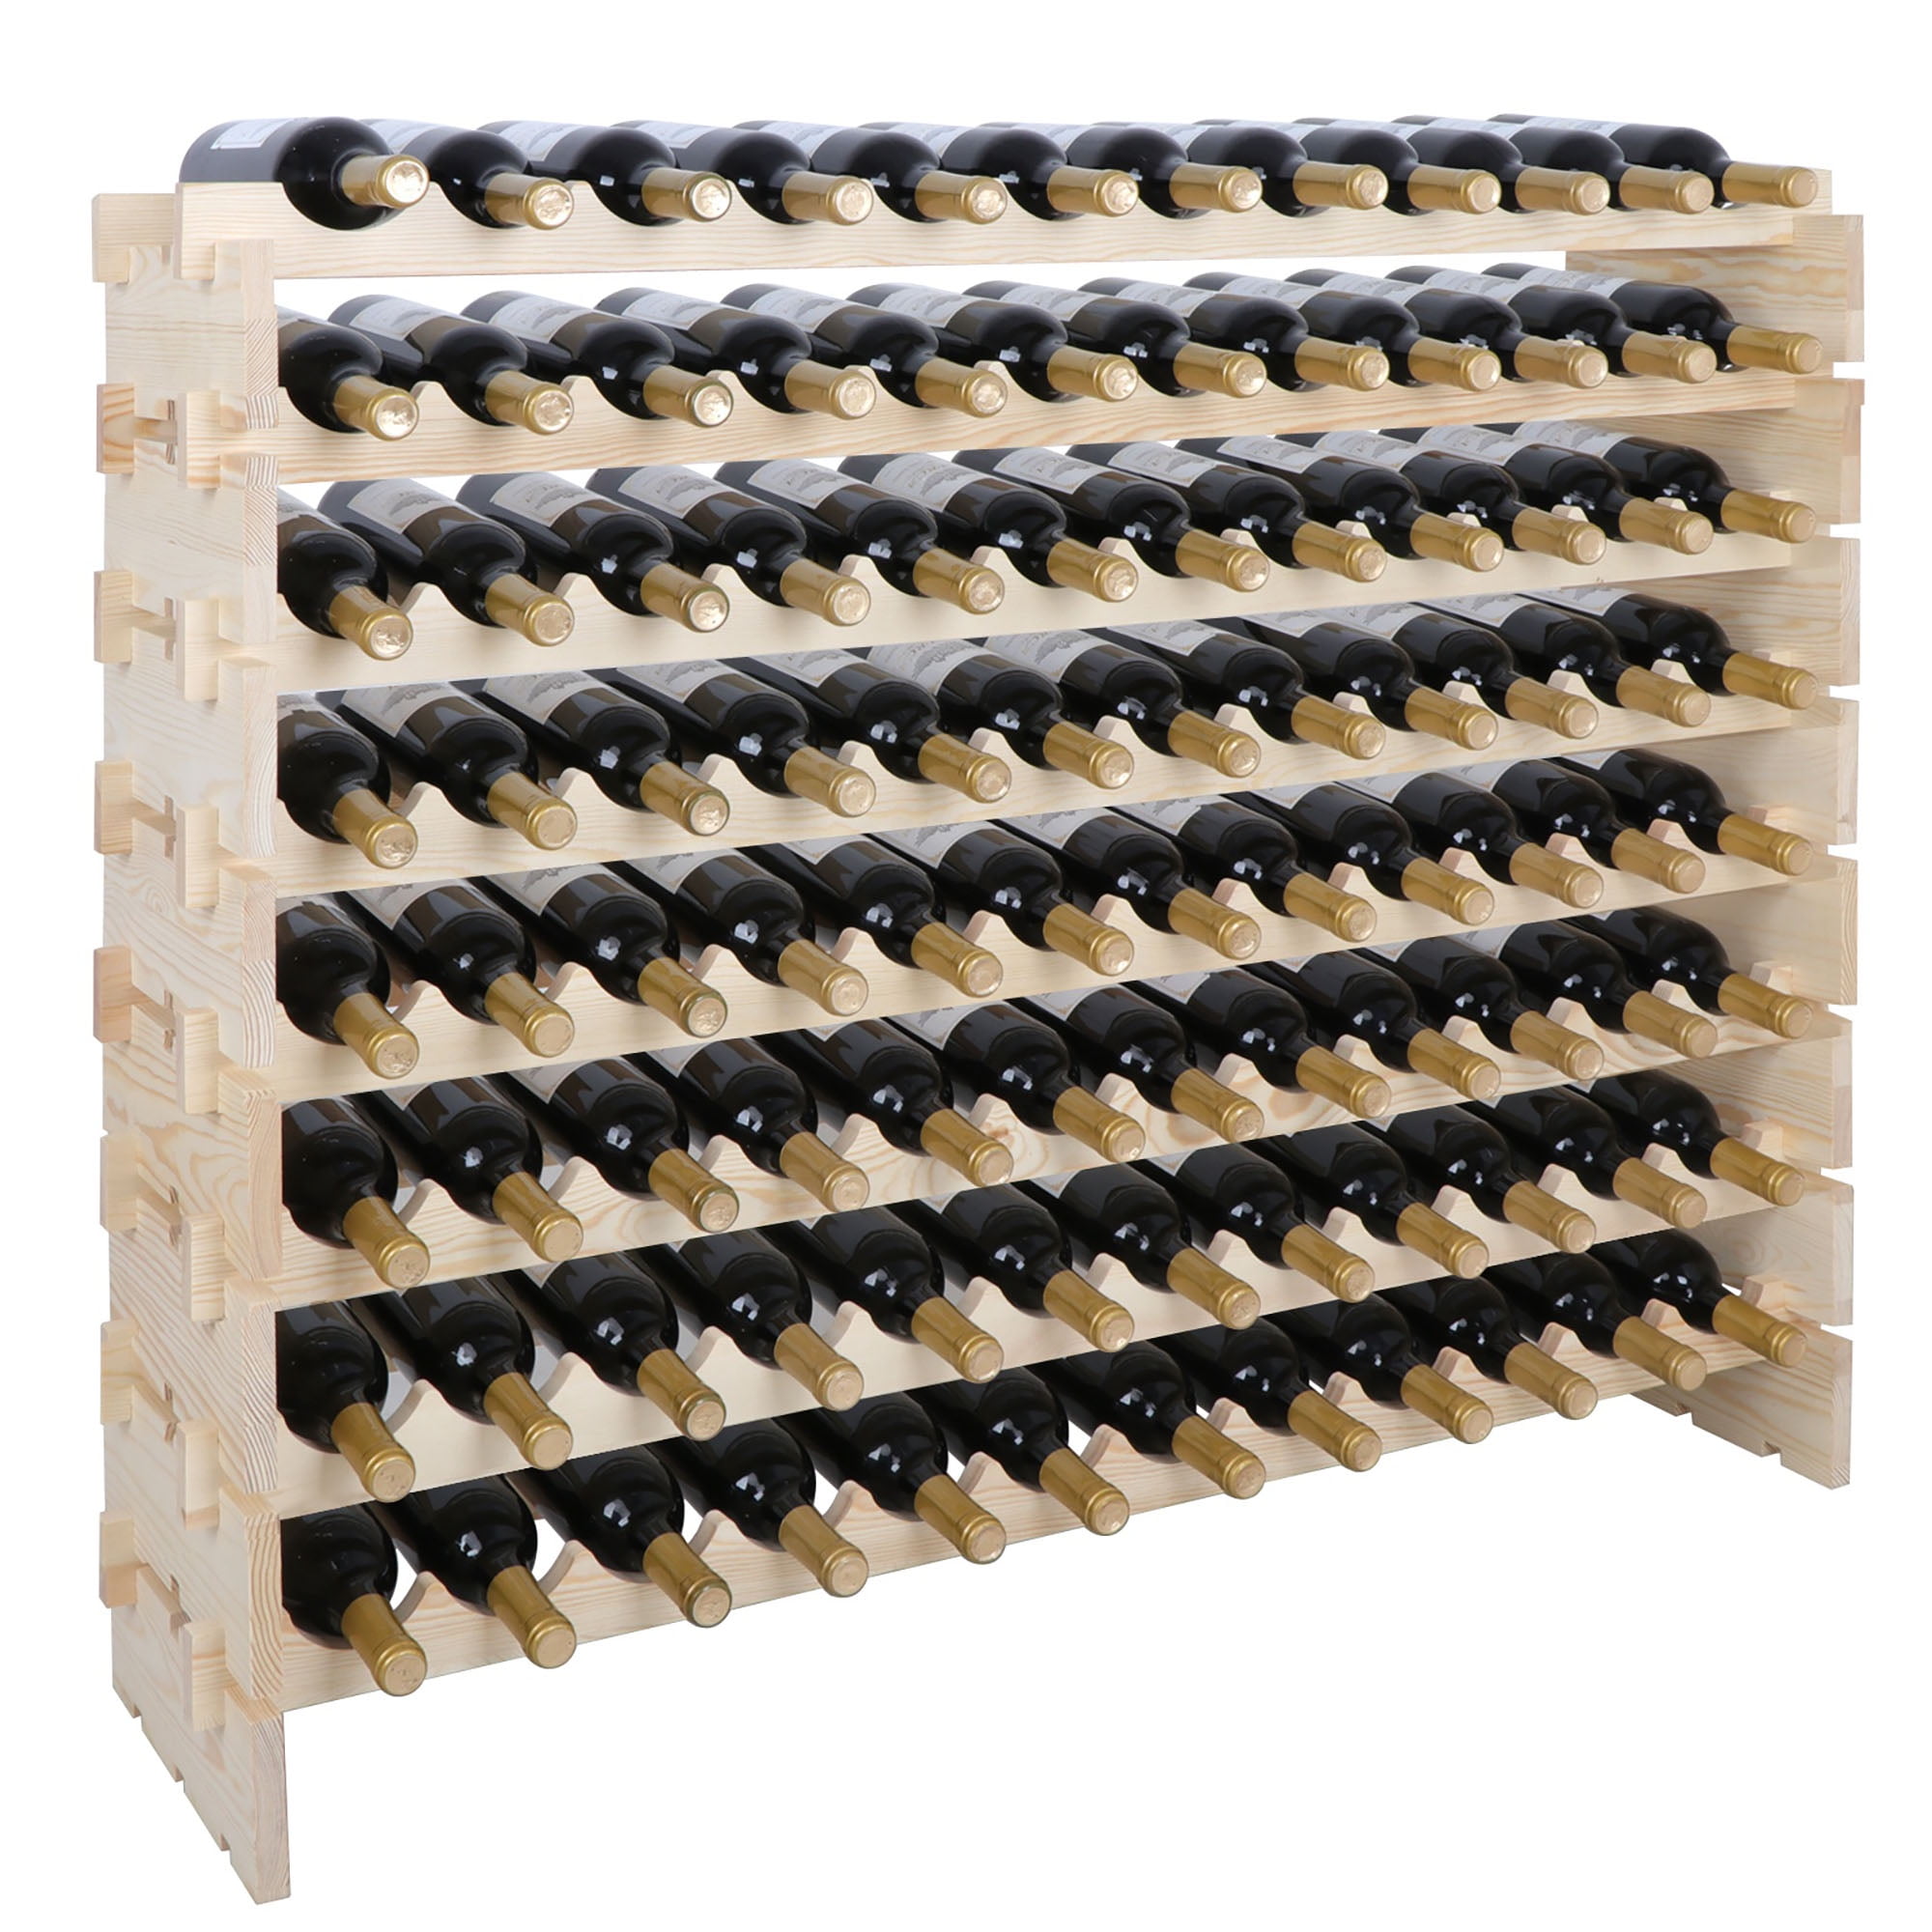 Wooden Wine Rack,Housewares Stackable Wine Storage Stand Organiser,6 Tier Freestanding Natural Solid Wood Wine Holder,Display Shelves 72 Bottles Capacity 6 Tiers 